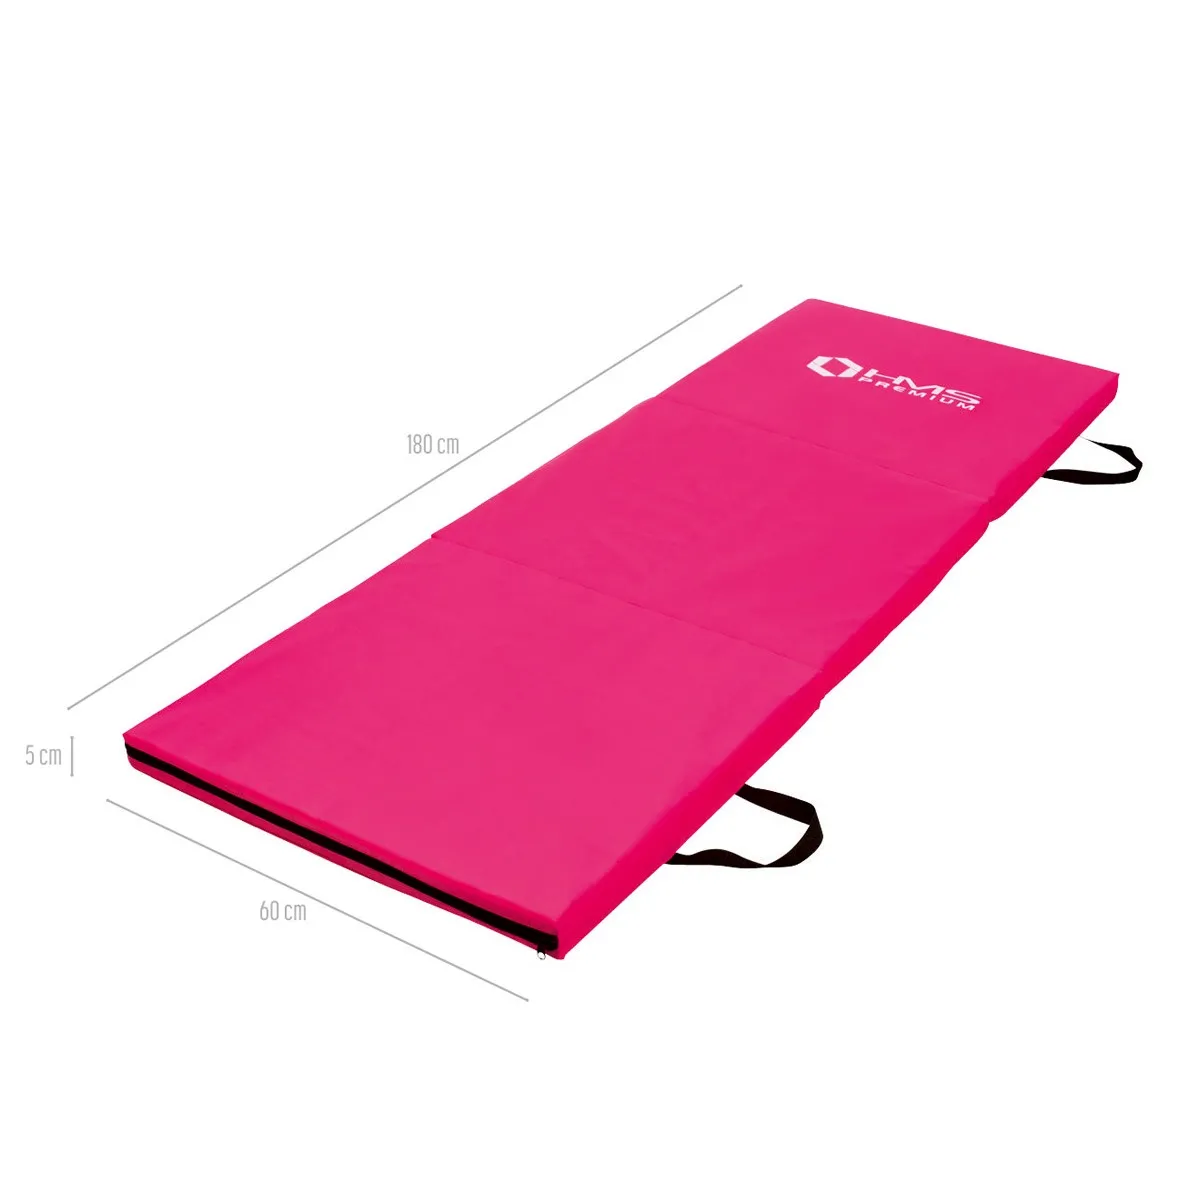 Foldable gymnastics mat pink 180x60 cm